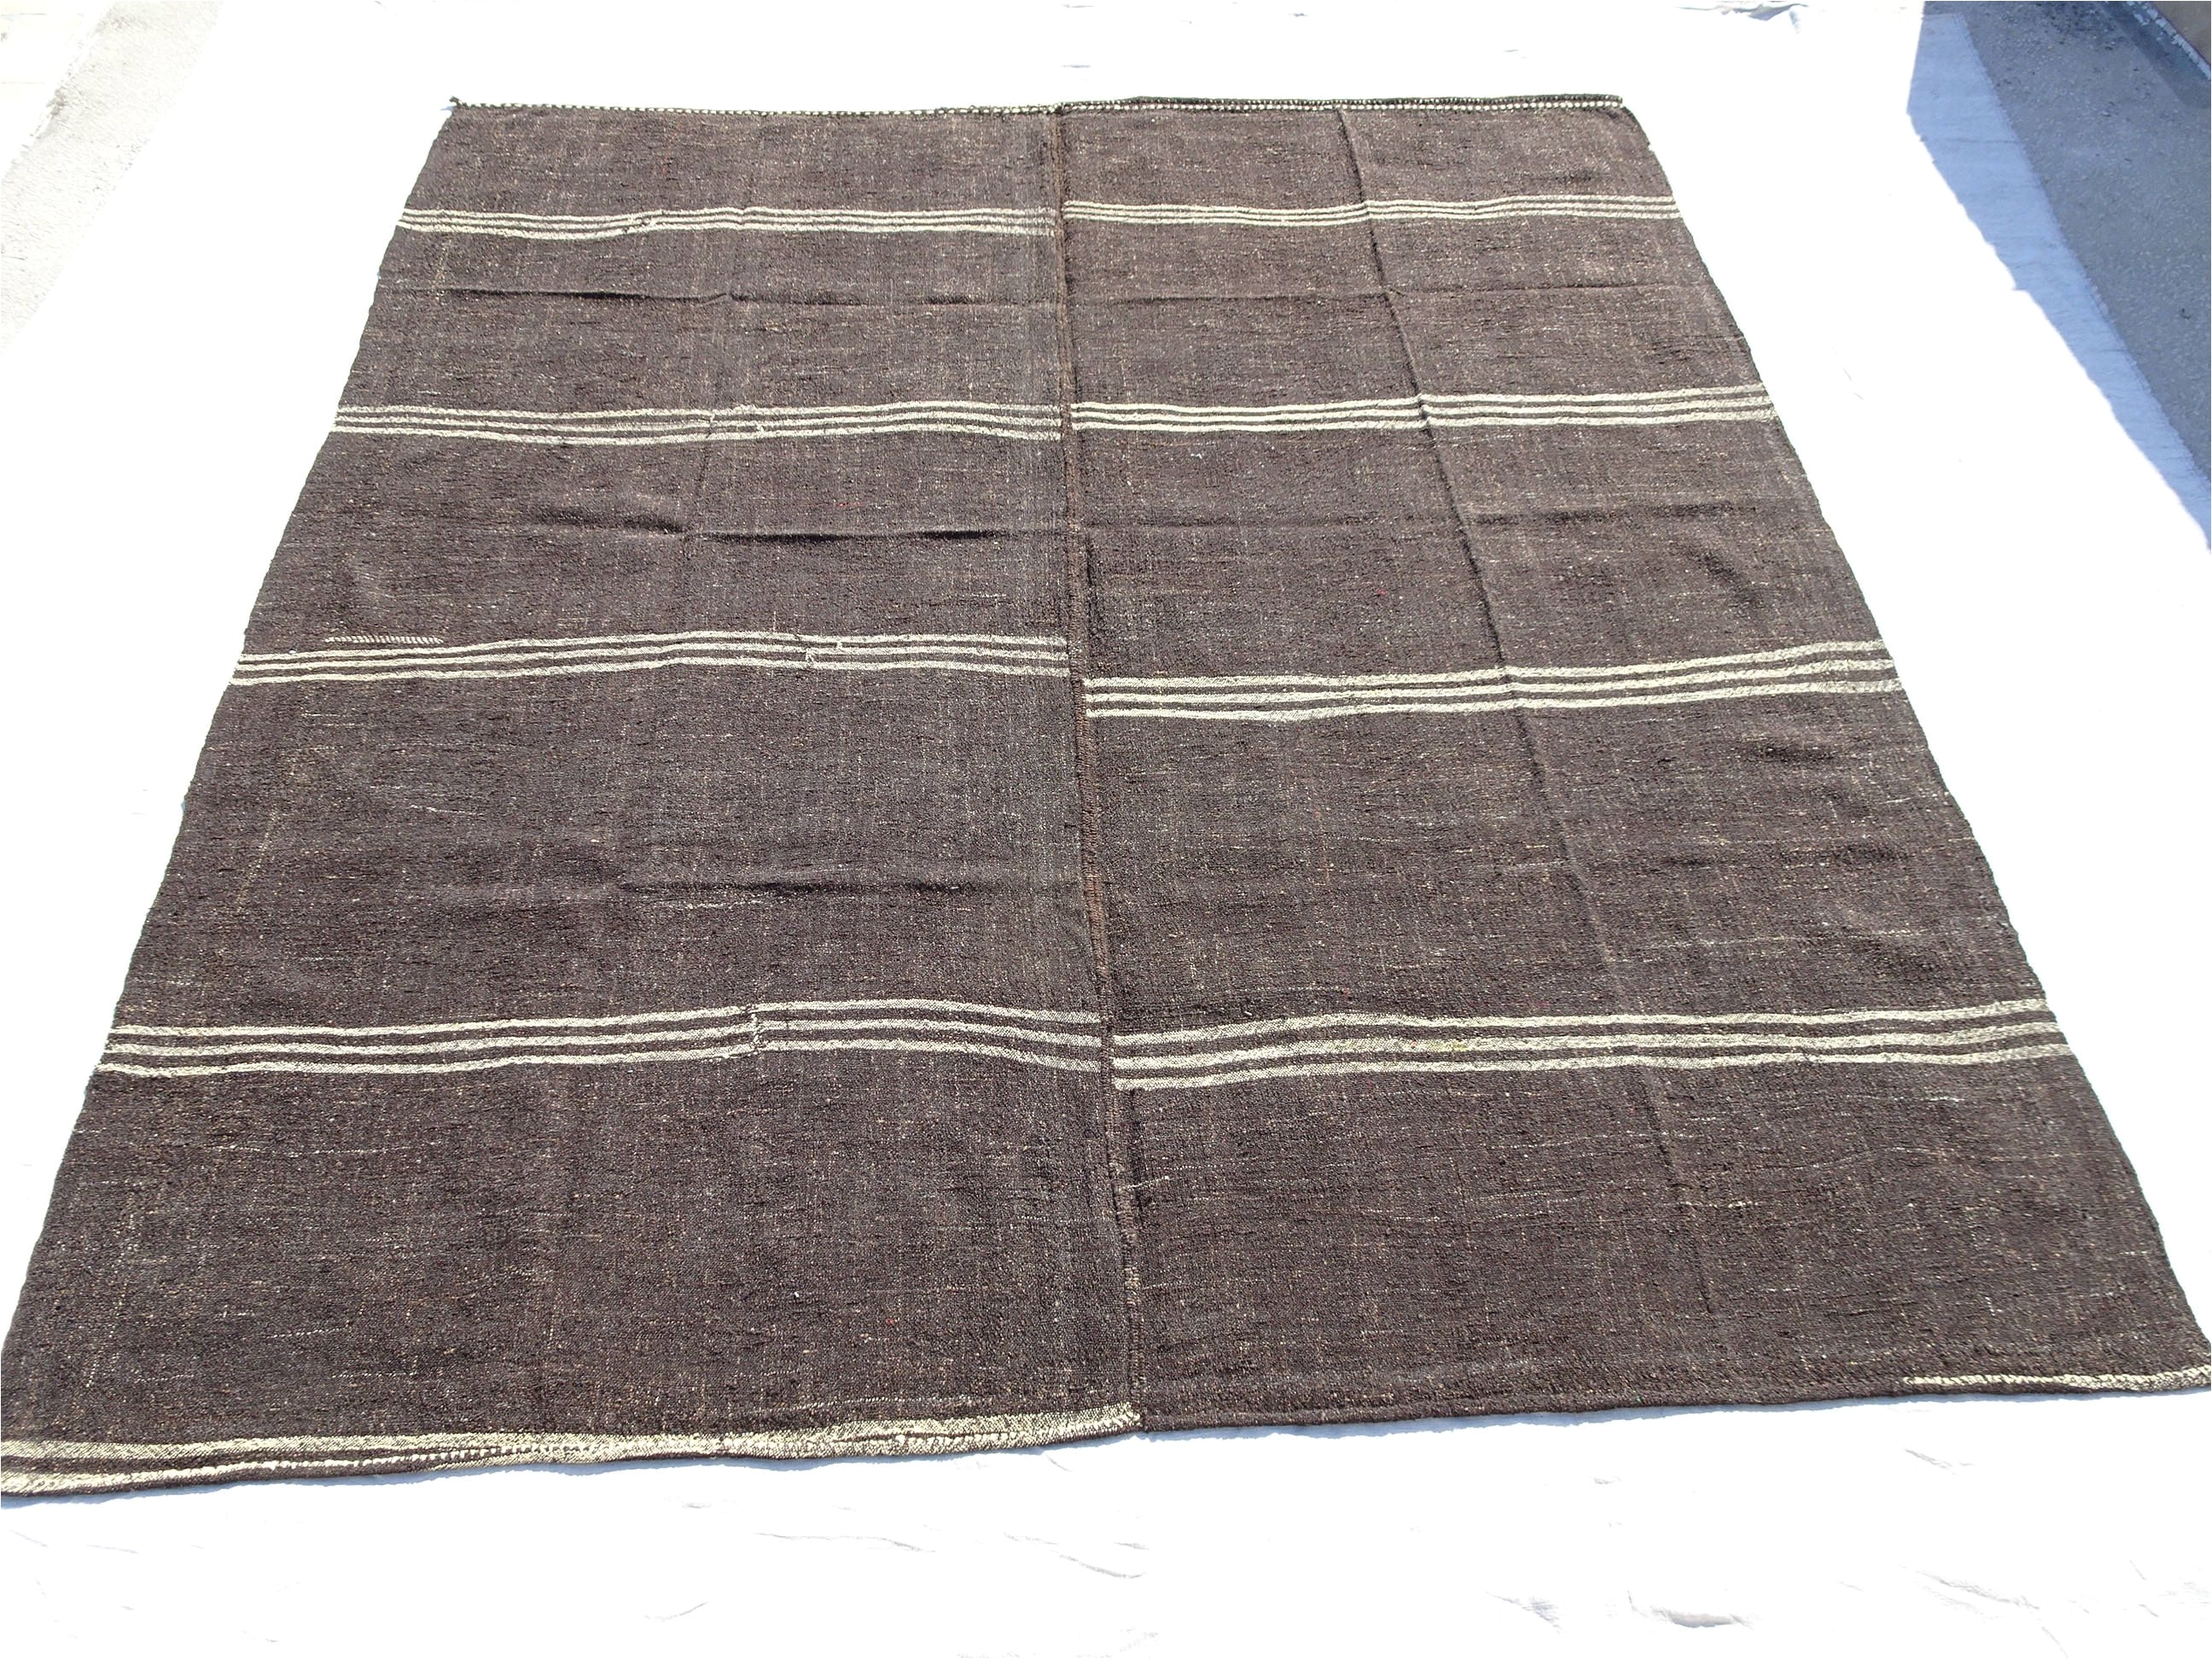 oversize dark brown and cream kilim rug 10 x10 9 feet 304x327 cm large vintage turkish kilim rug stripe pattern palece size kilim rug